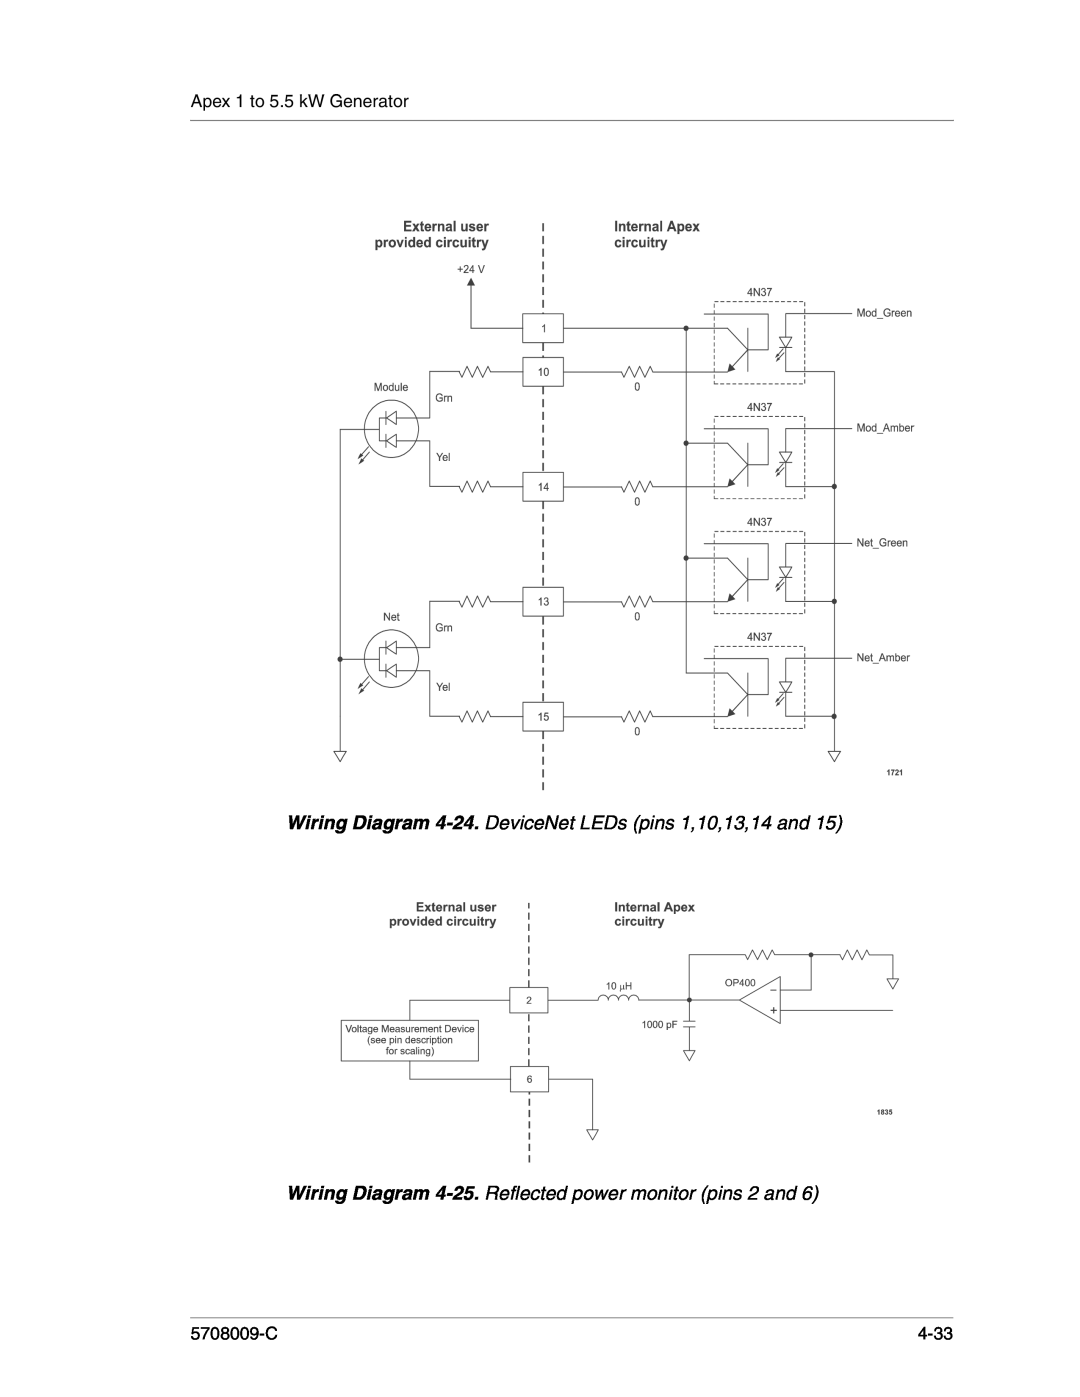 Apex Digital 5708009-C manual Wiring Diagram 4-24. DeviceNet LEDs pins 1,10,13,14 and, Apex 1 to 5.5 kW Generator, 4-33 